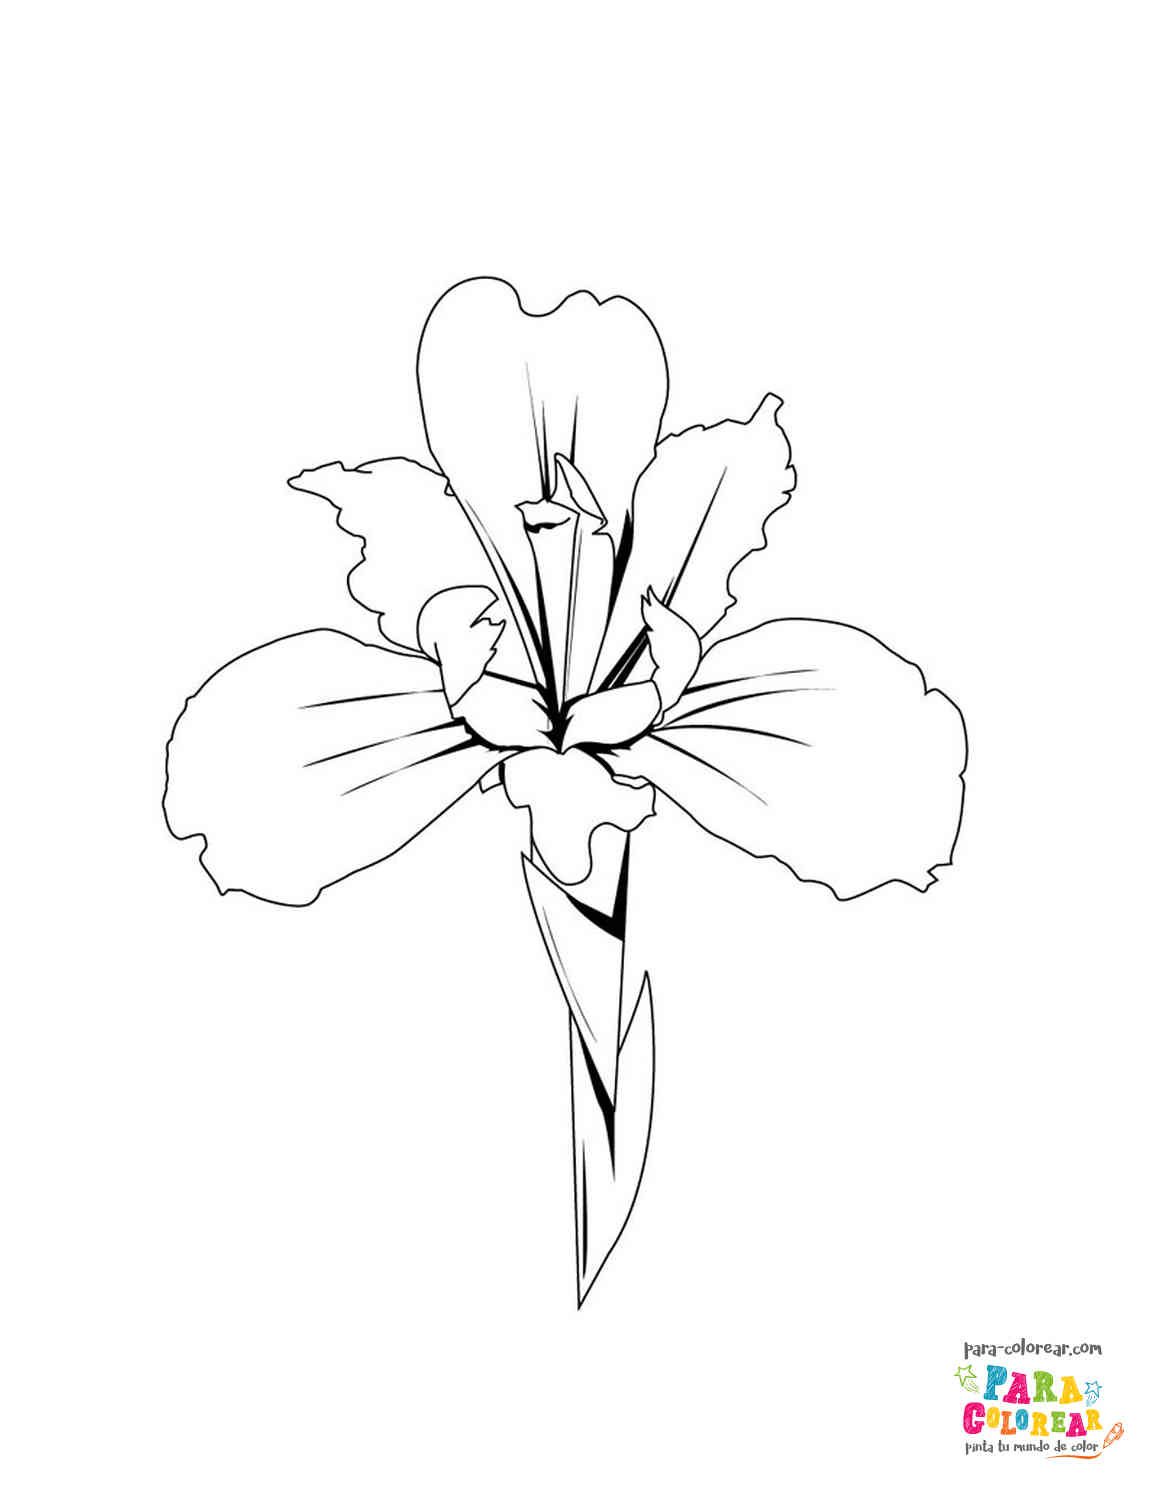 Dibujo de flor iris para colorear | Para-Colorear.com